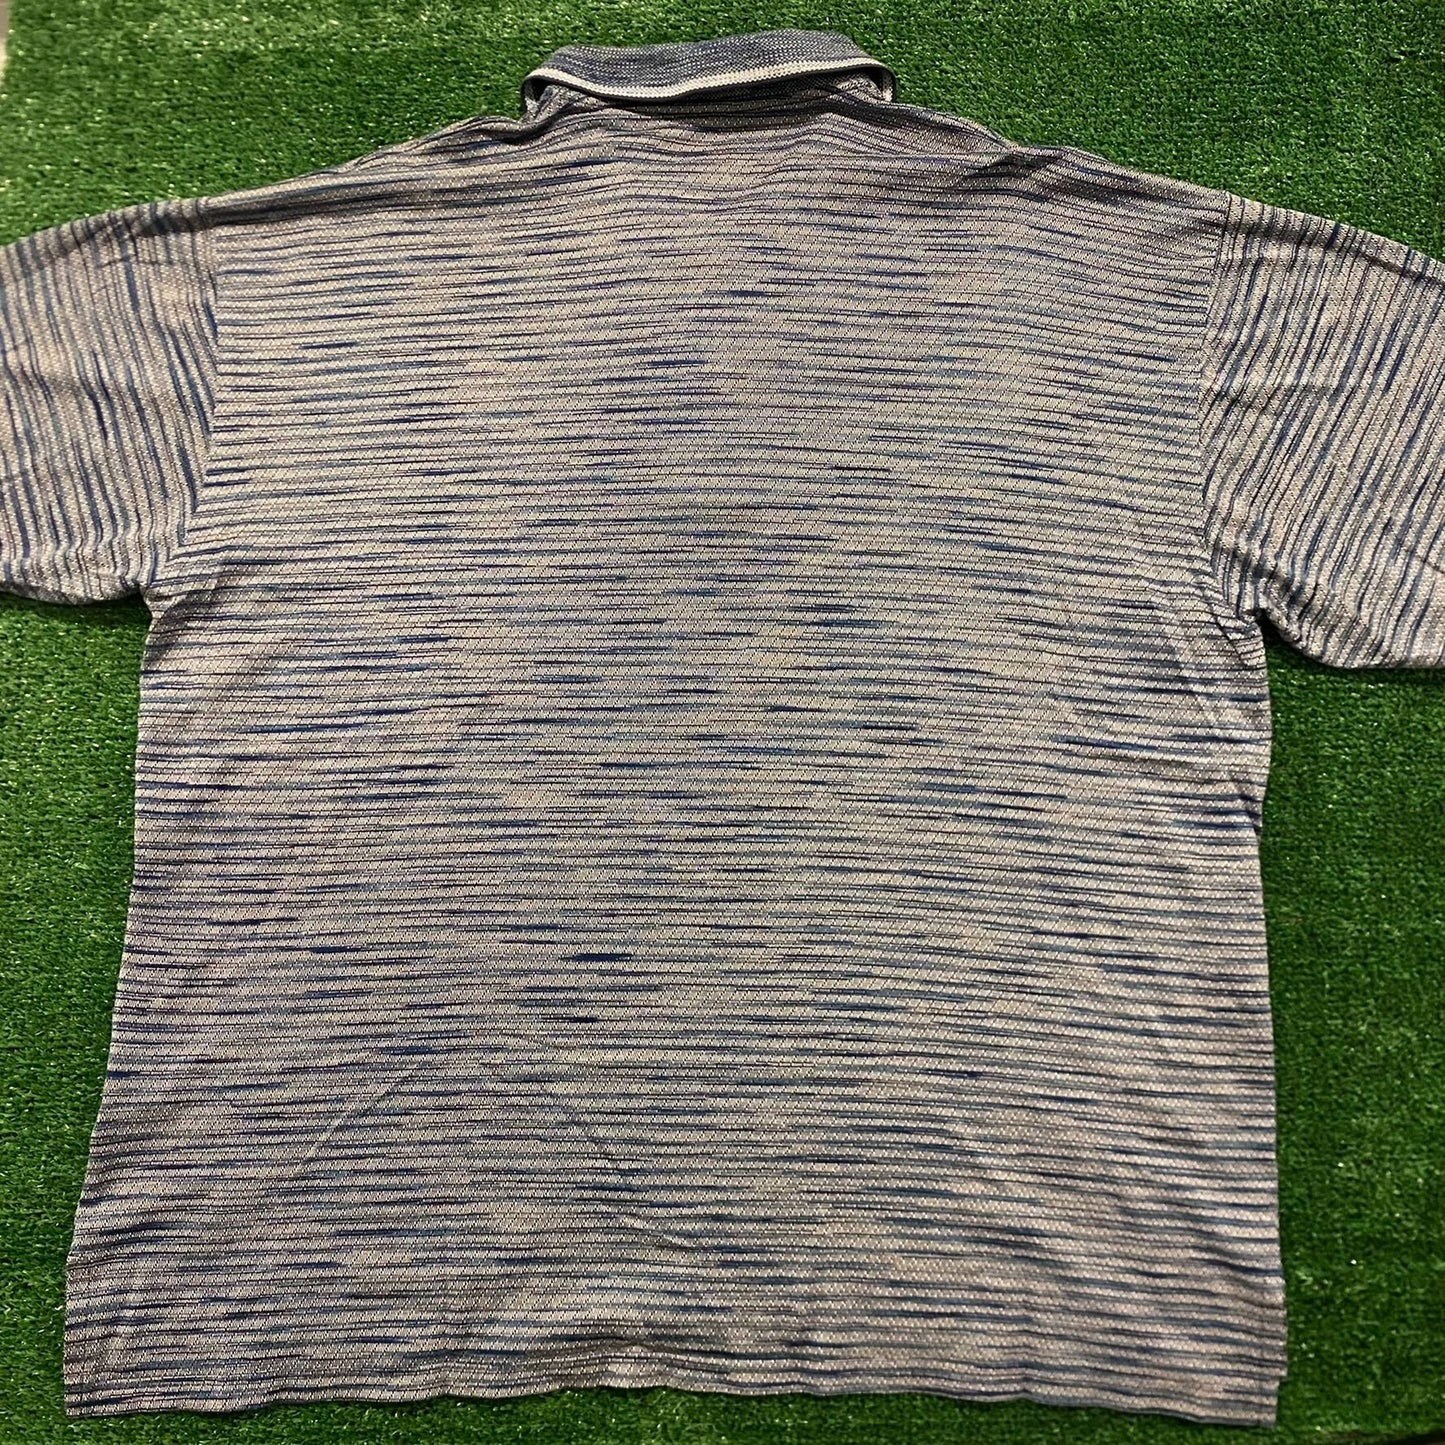 Vintage 90s Golf Tennis Polo Shirt